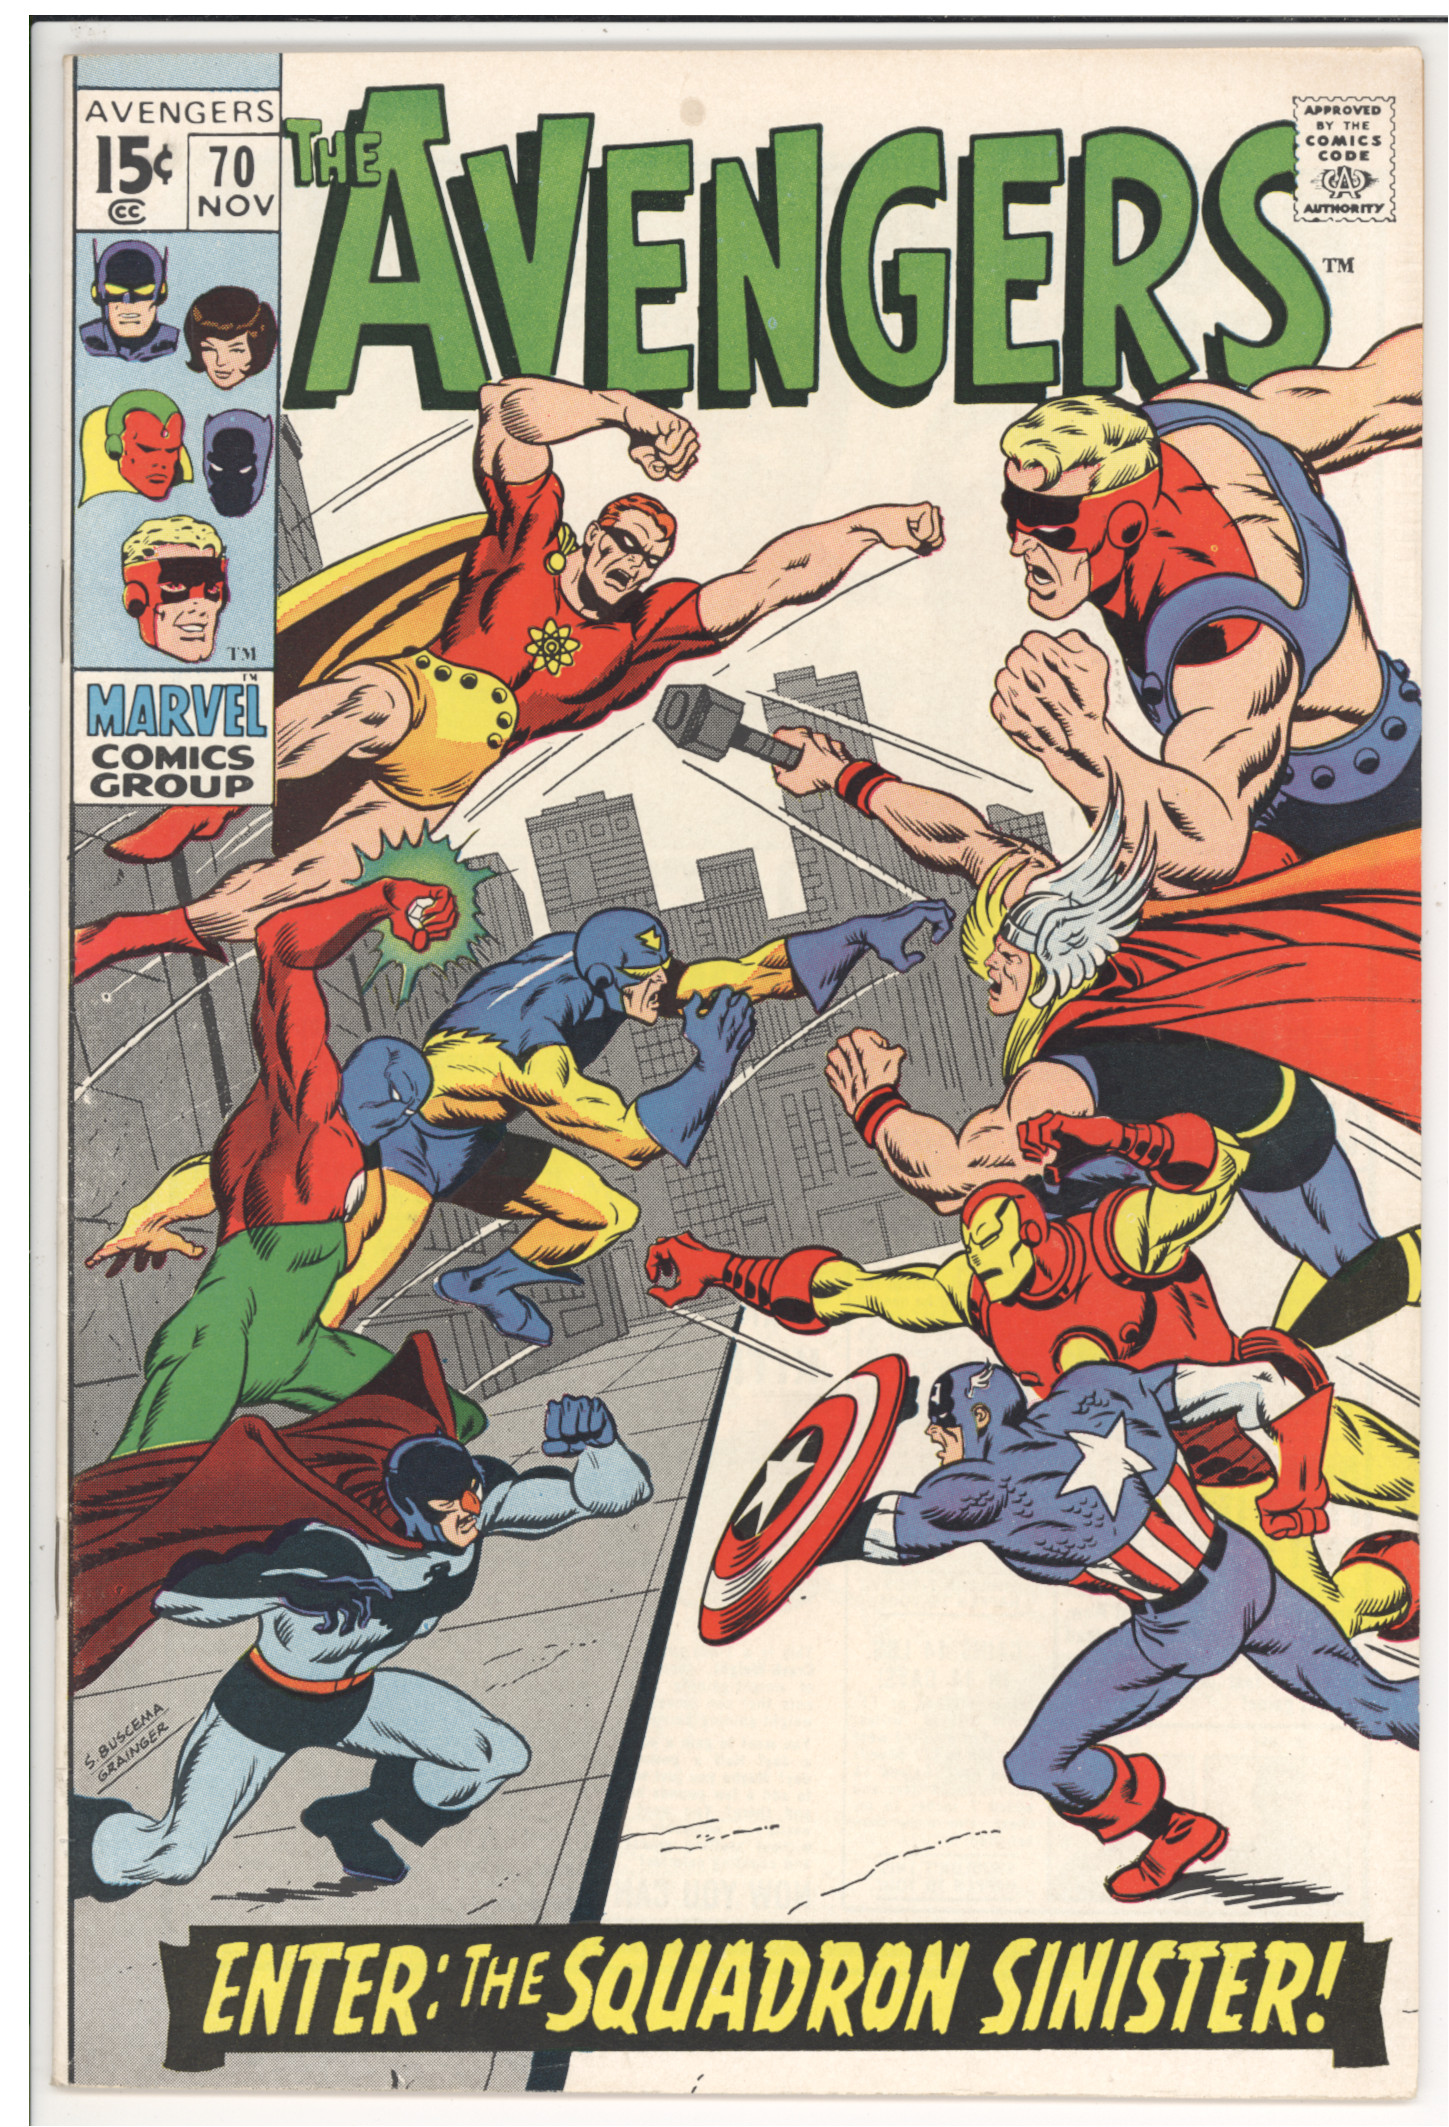 Avengers #70 front